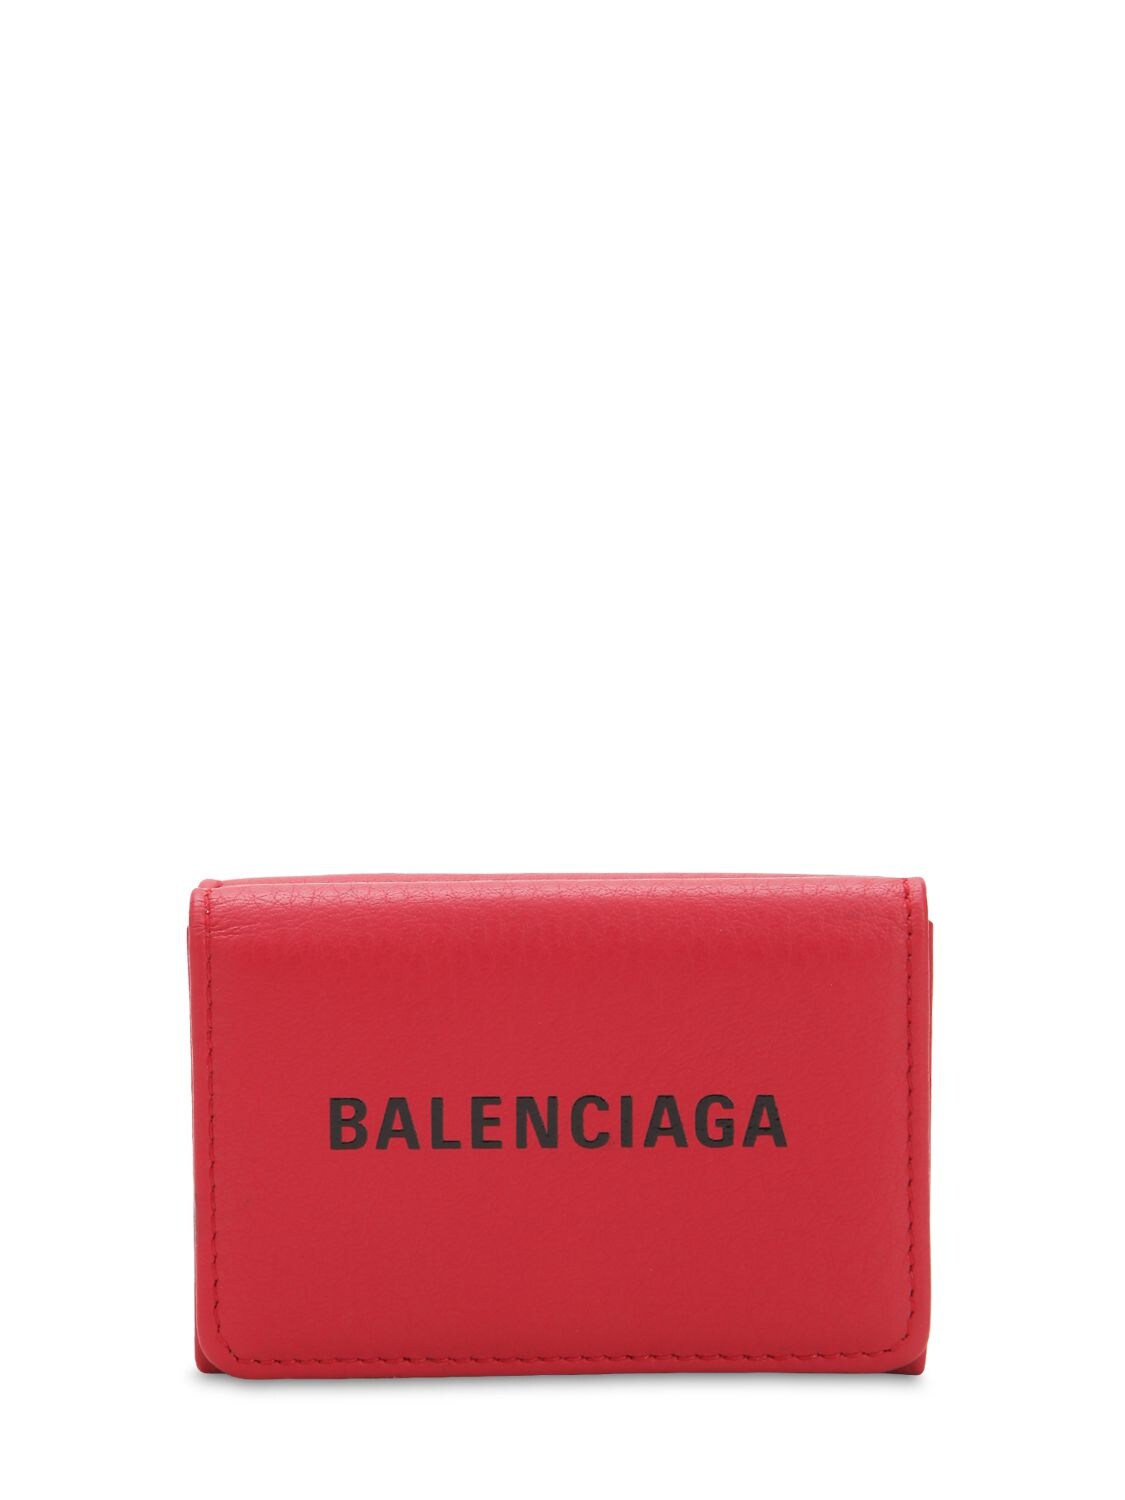 Balenciaga 皮革迷你钱包 In Red